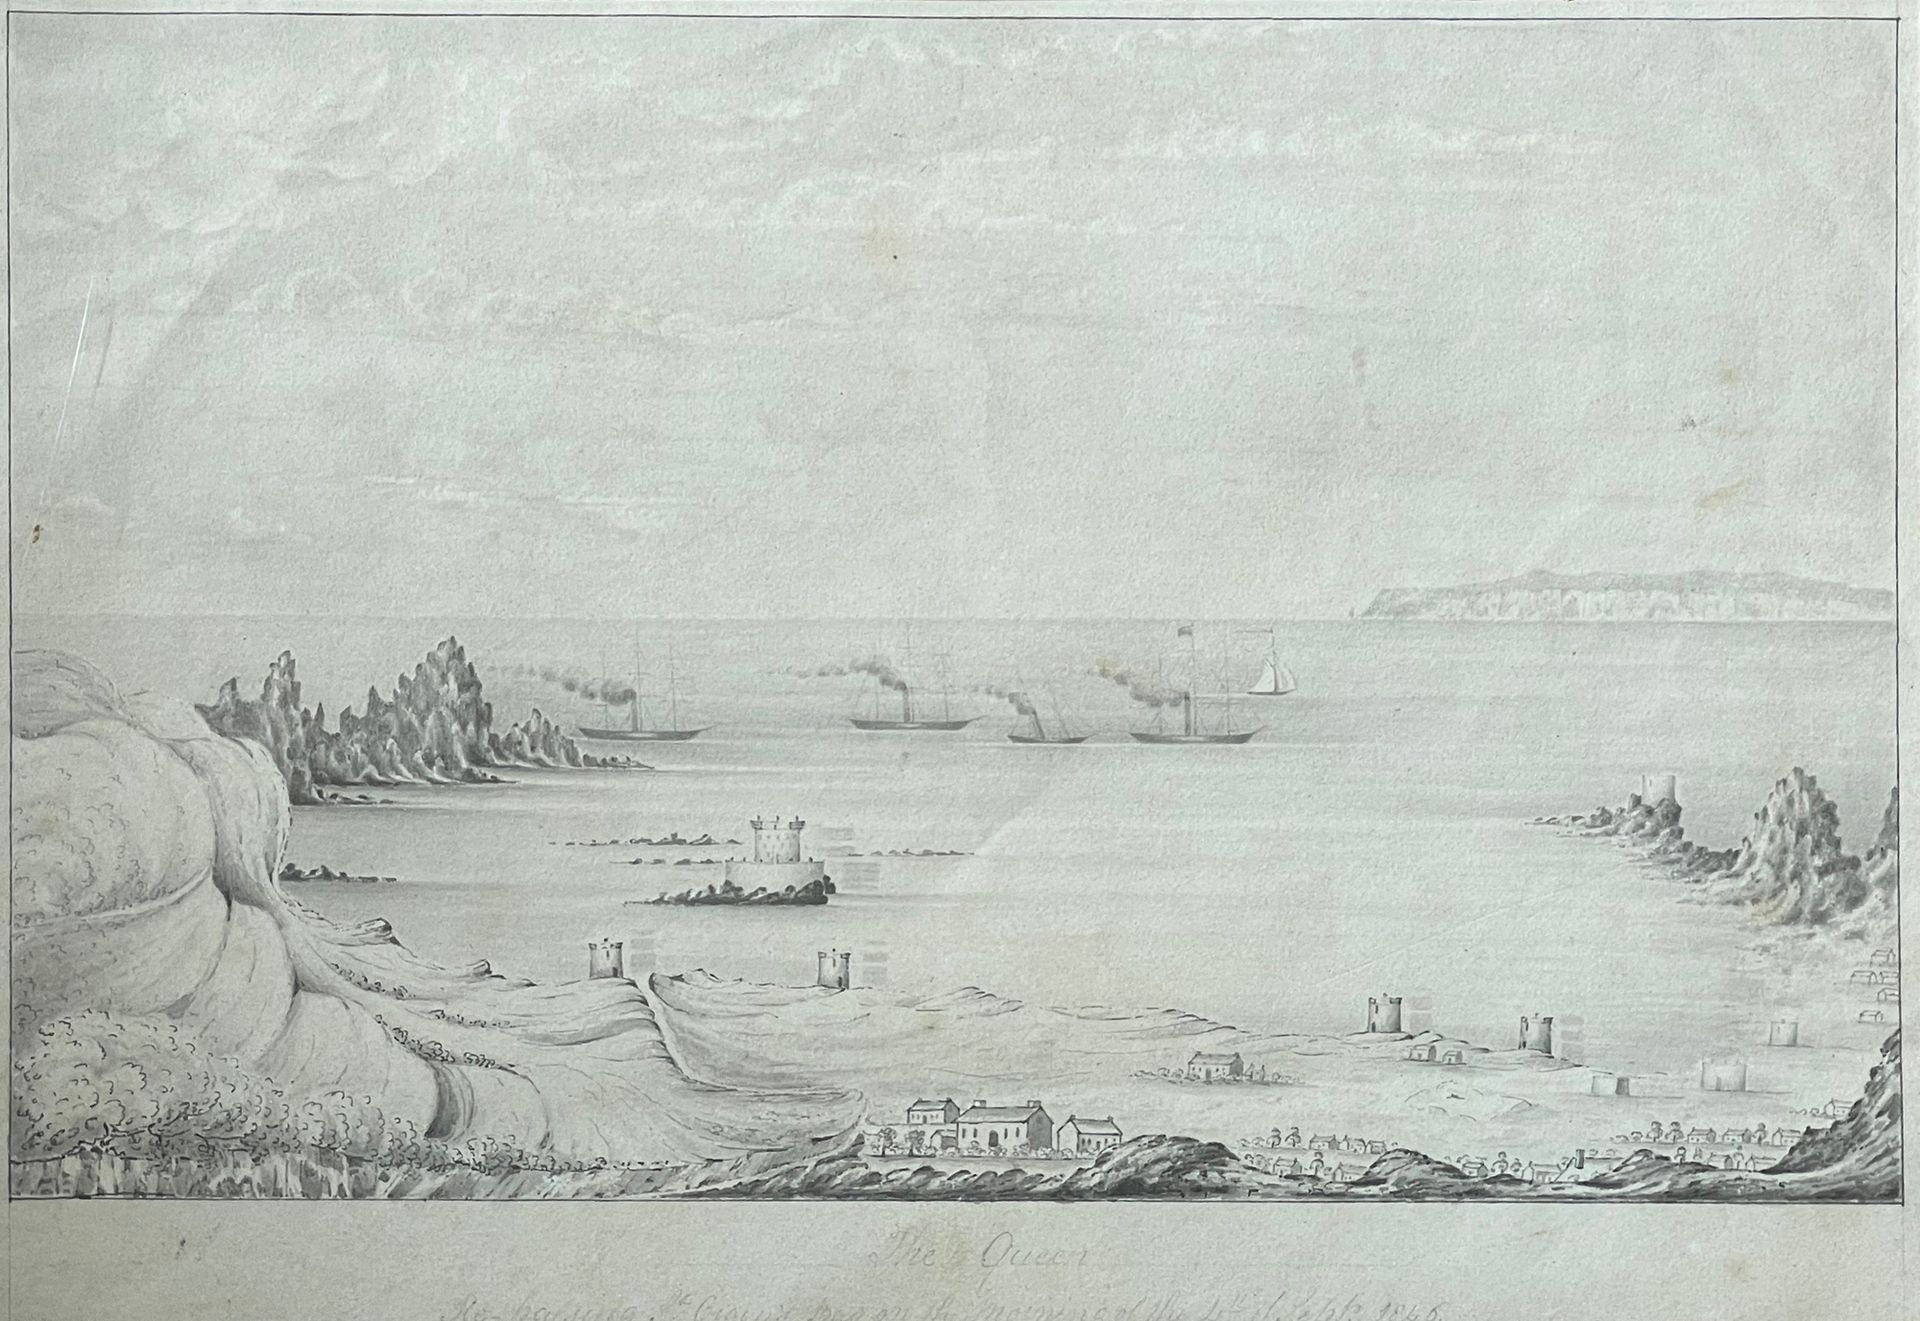 École anglaise, XIXe siècle 
英格兰女王在盎格鲁-撒克逊群岛附近的航行
1846年的水墨画
18 x 29,5 (视图)